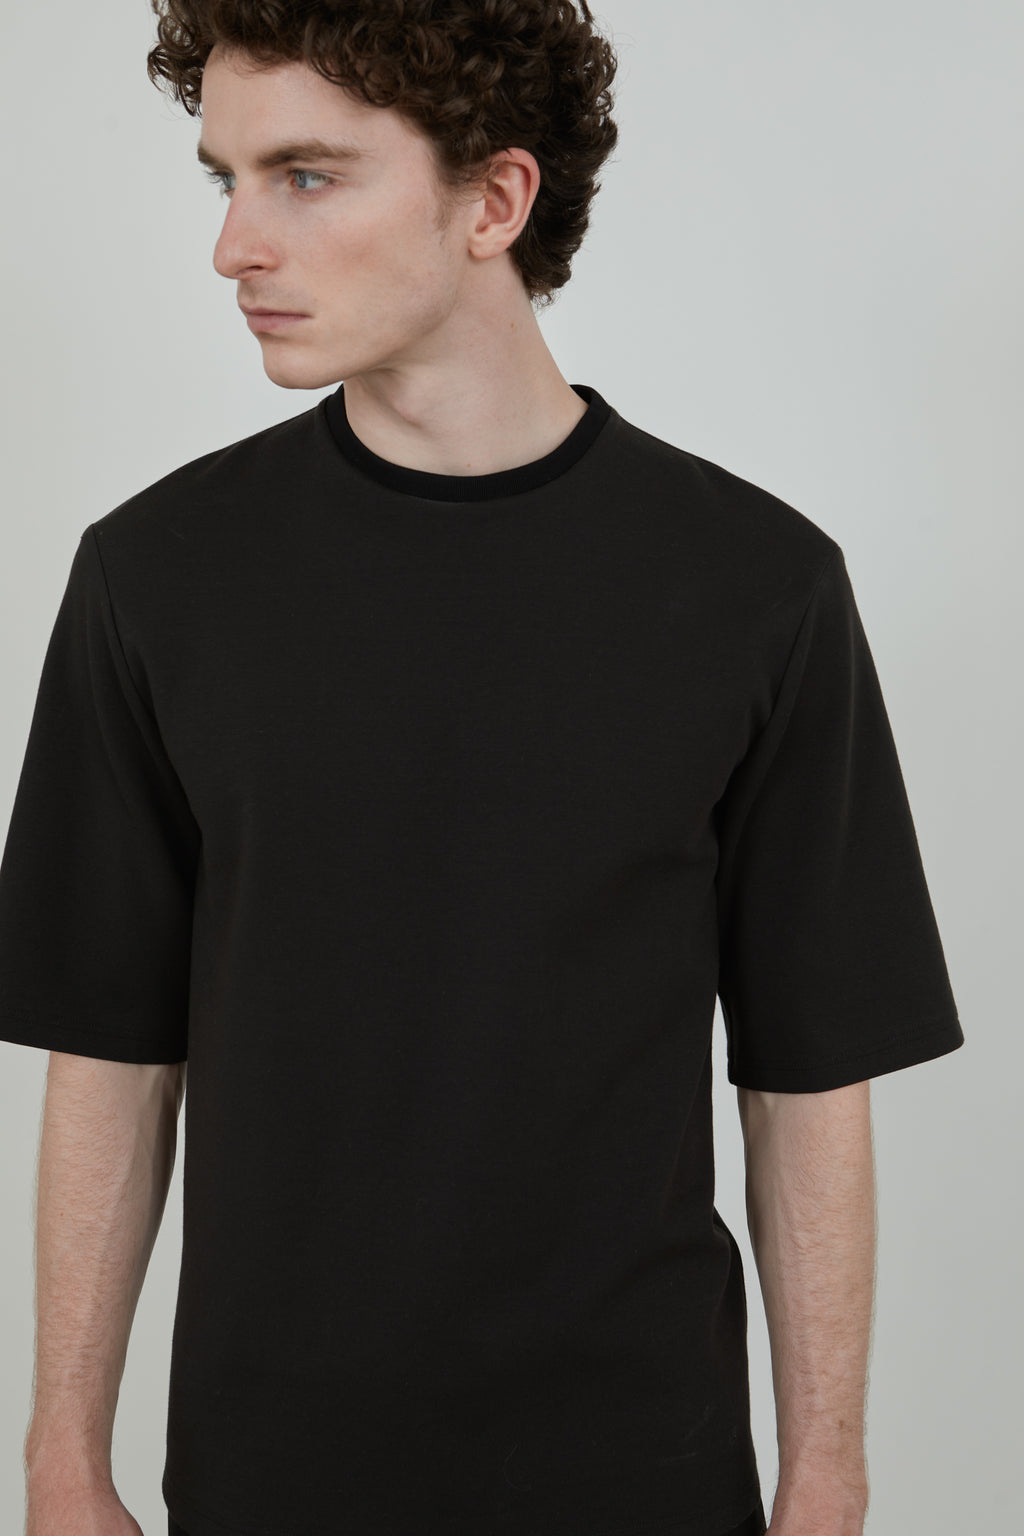 Alfred T-shirt | Black - Organic cotton